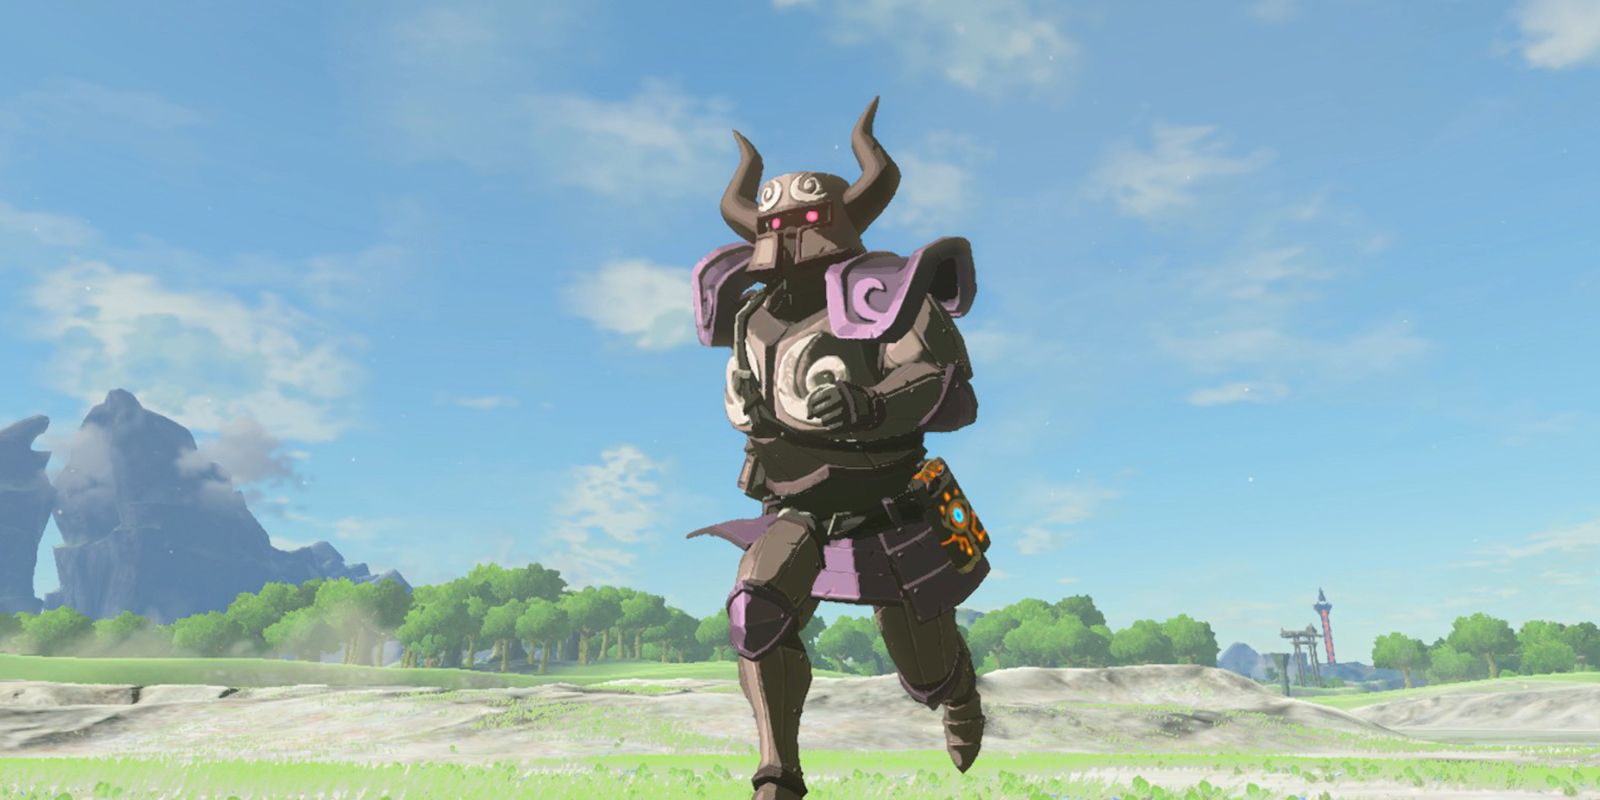 Link runs through a field while wearing the Phantom Armor Set